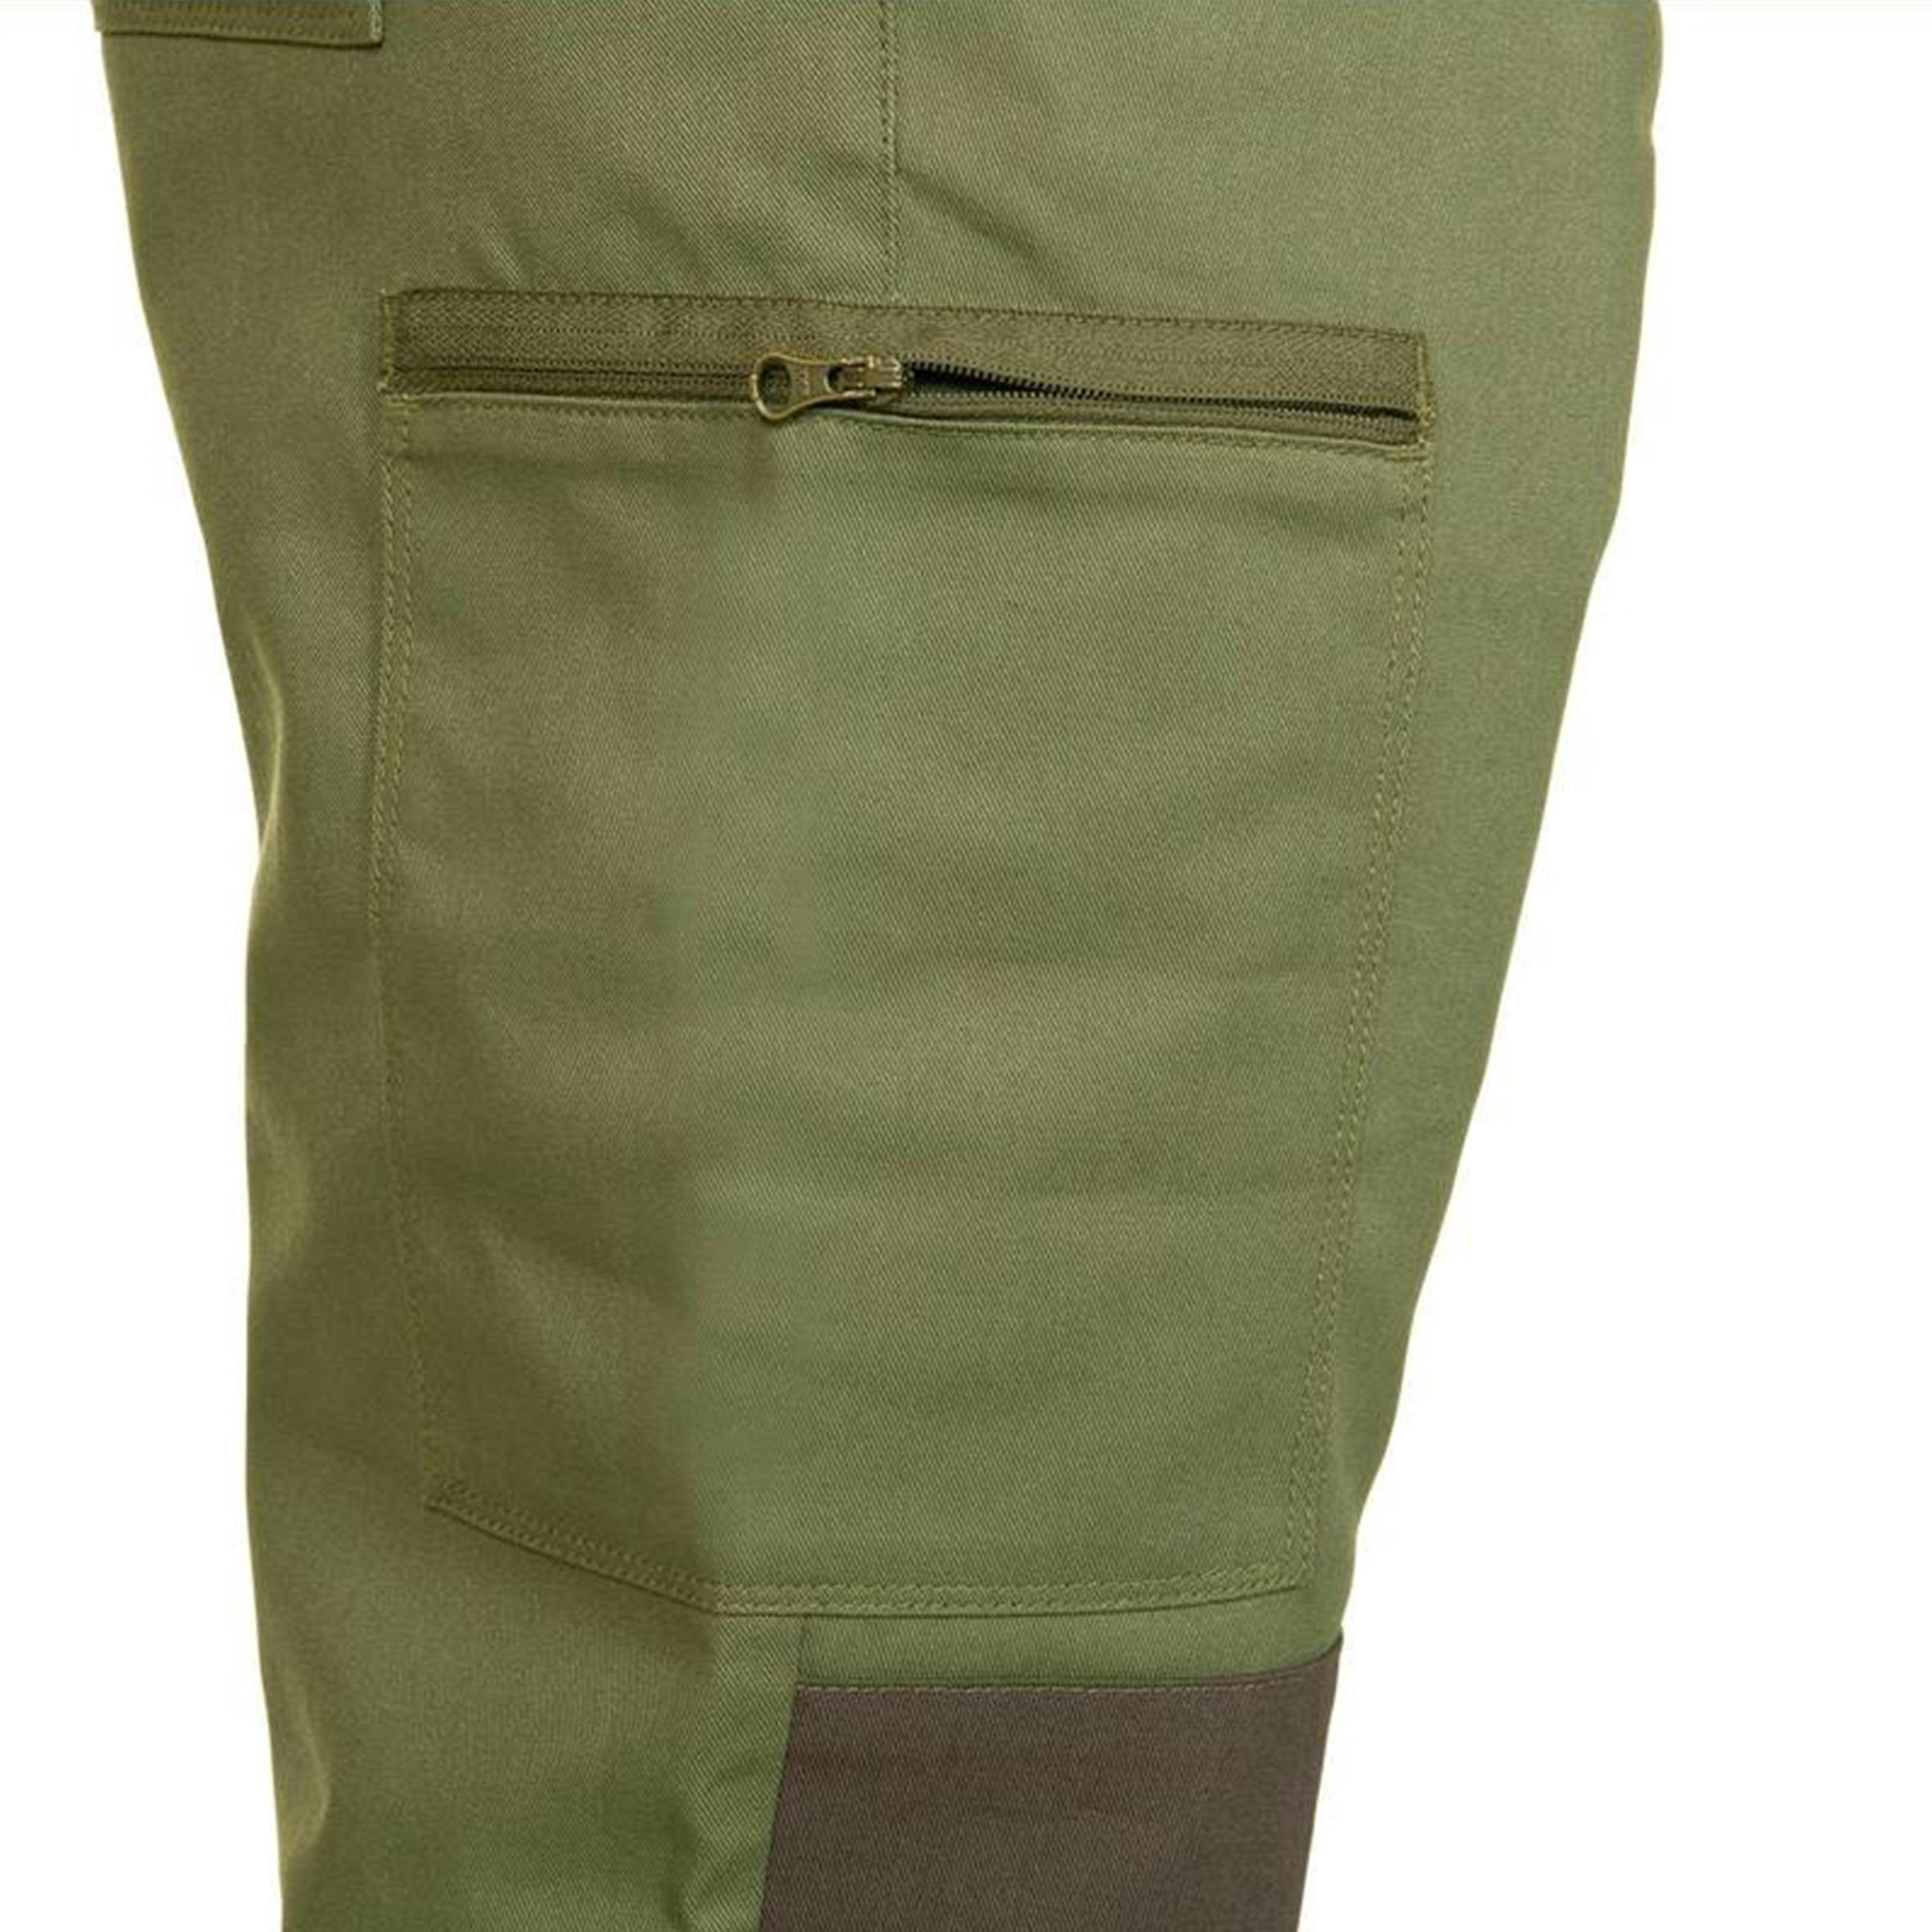 STEPPE 300 | ខោដើរព្រៃ | ខោដើរព្រៃ Steppe300 CARGO 300 Resistant Trousers -  Black Reference: 8155549 $20.00 Website: www.decathlon.com.kh Location 1:  AEON Mall Sen Sok City,... | By Decathlon CambodiaFacebook